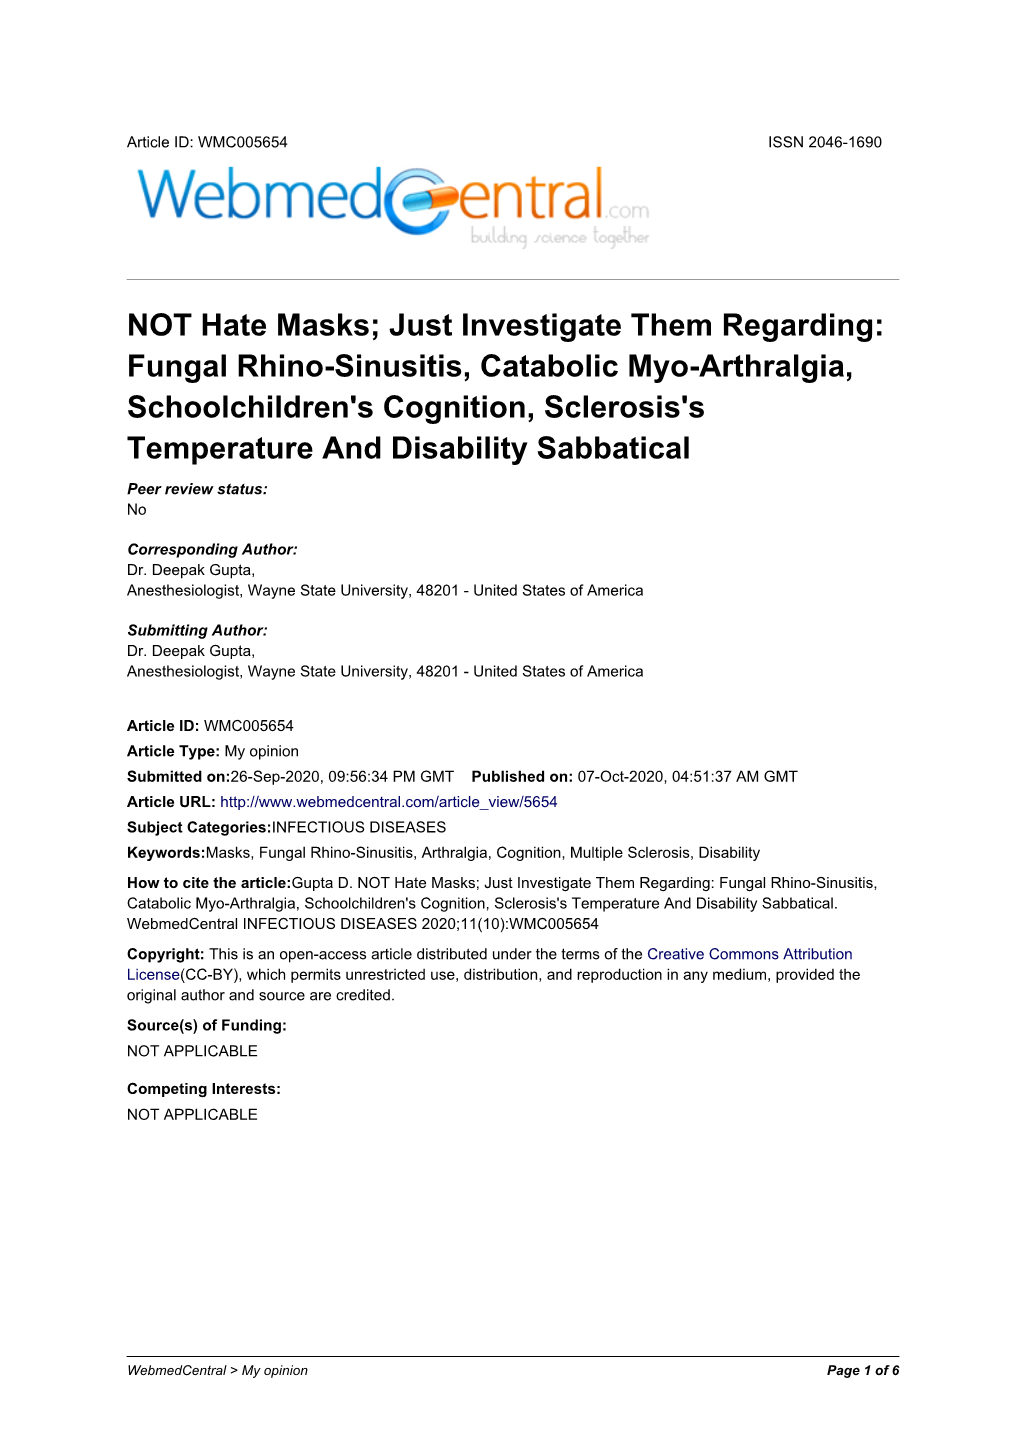 NOT Hate Masks; Just Investigate Them Regarding: Fungal Rhino